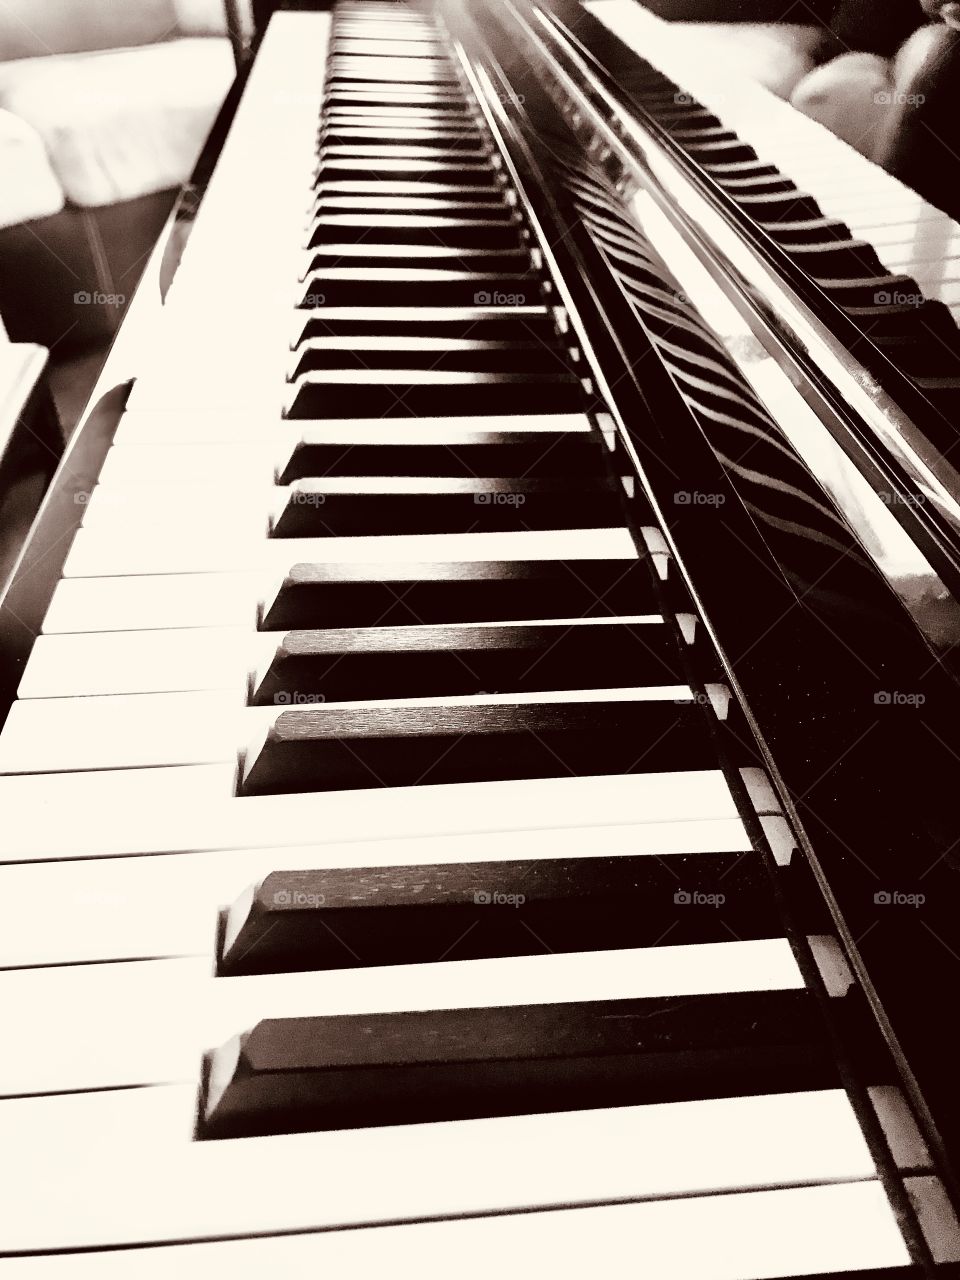 Gorgeous black and white rectangular piano keys make for sleek and beautiful photo! 